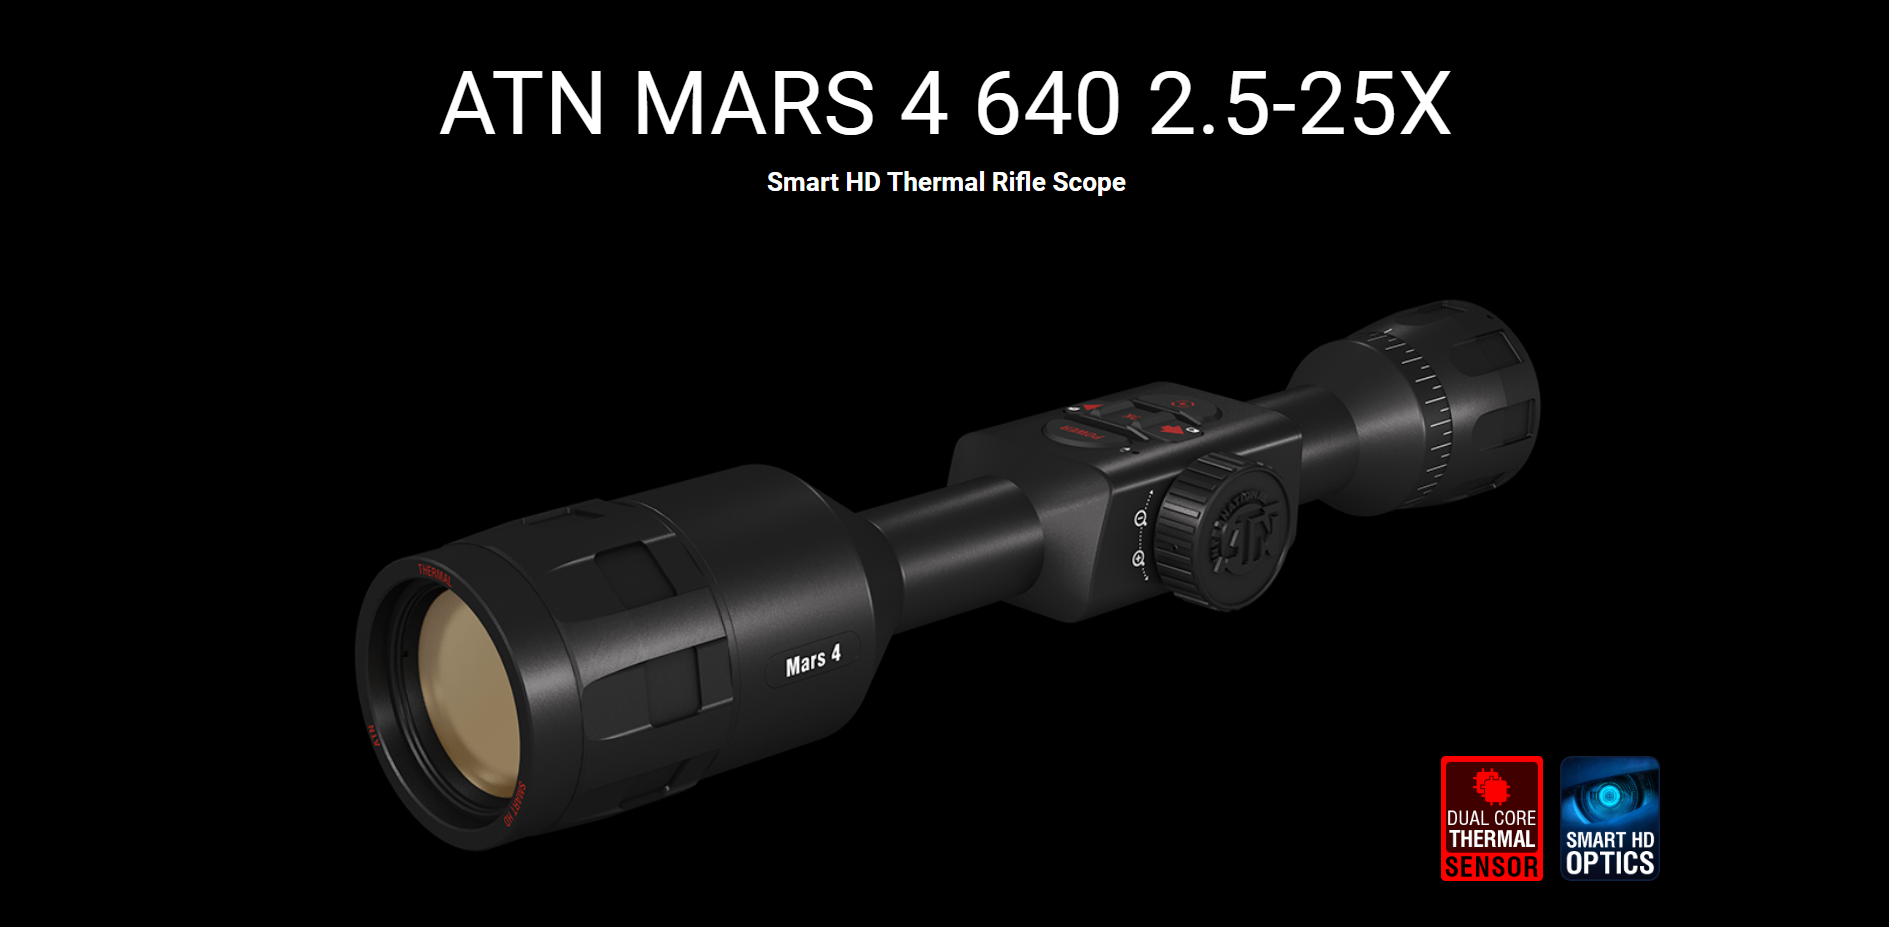 ATN MARS 4 640 2.5-25X